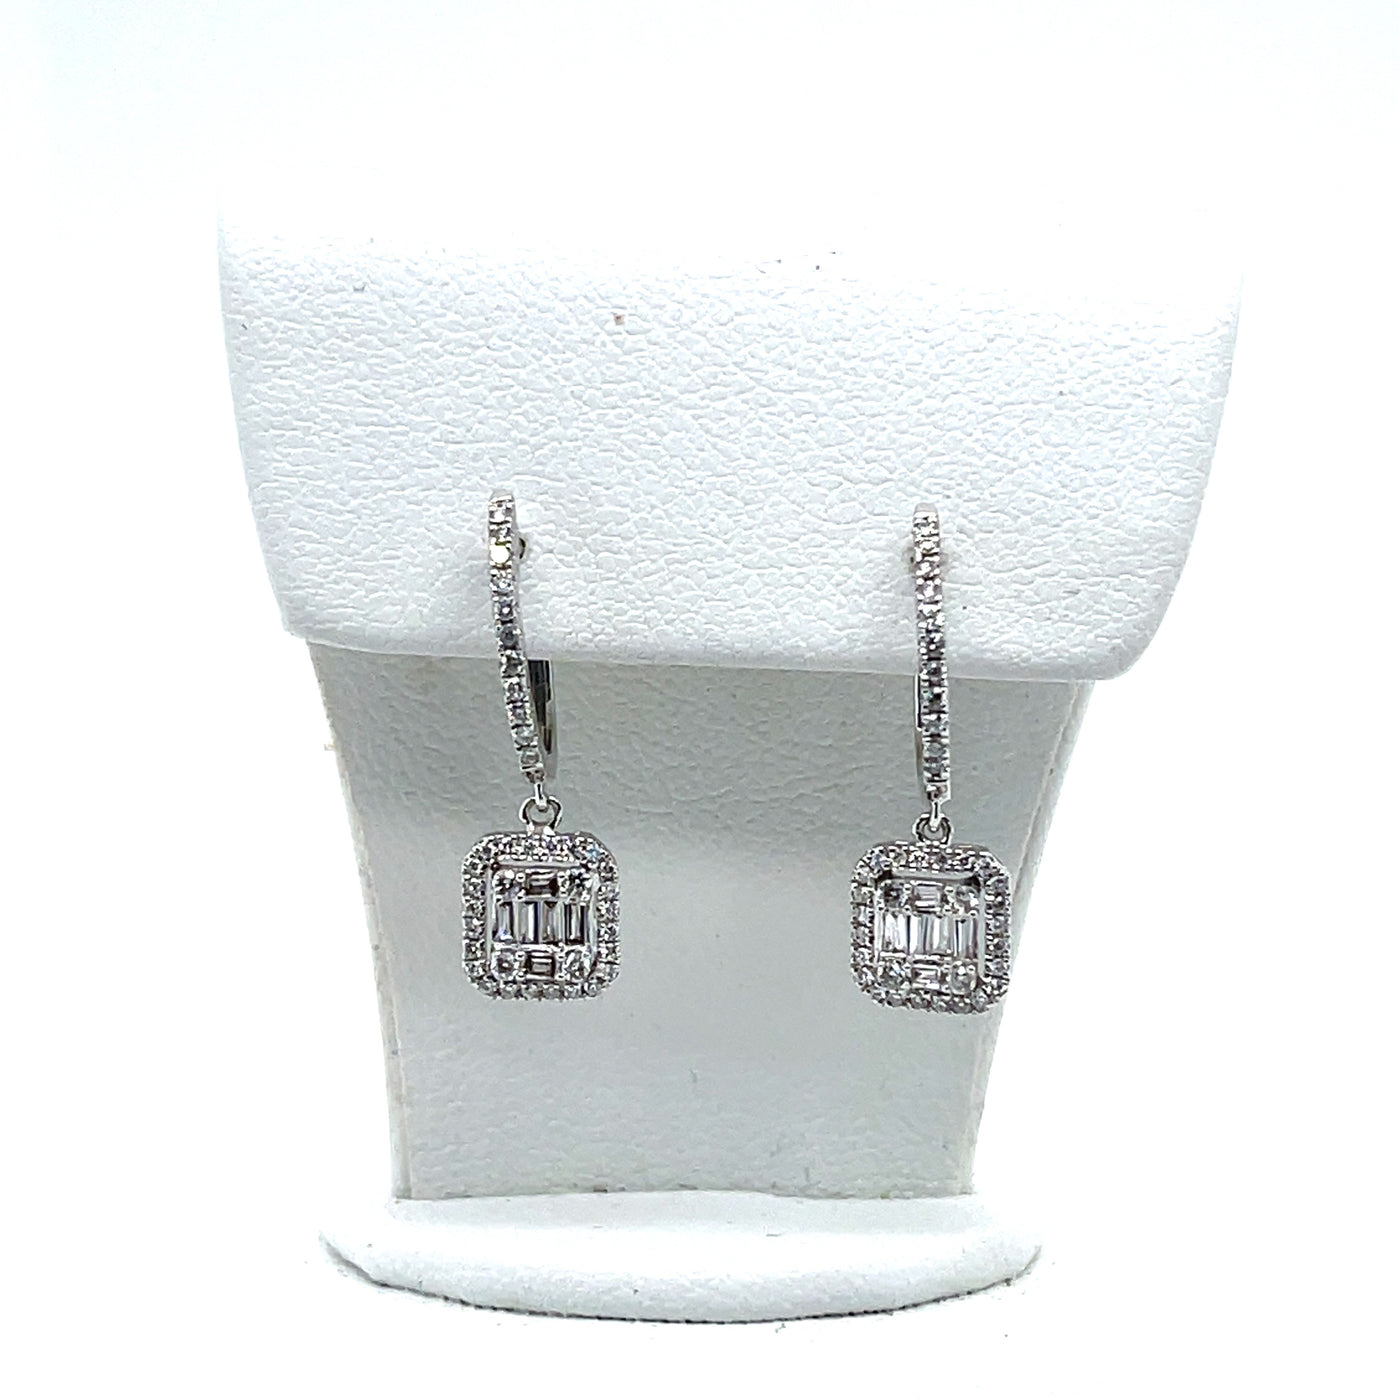 18ct white gold diamond earrings